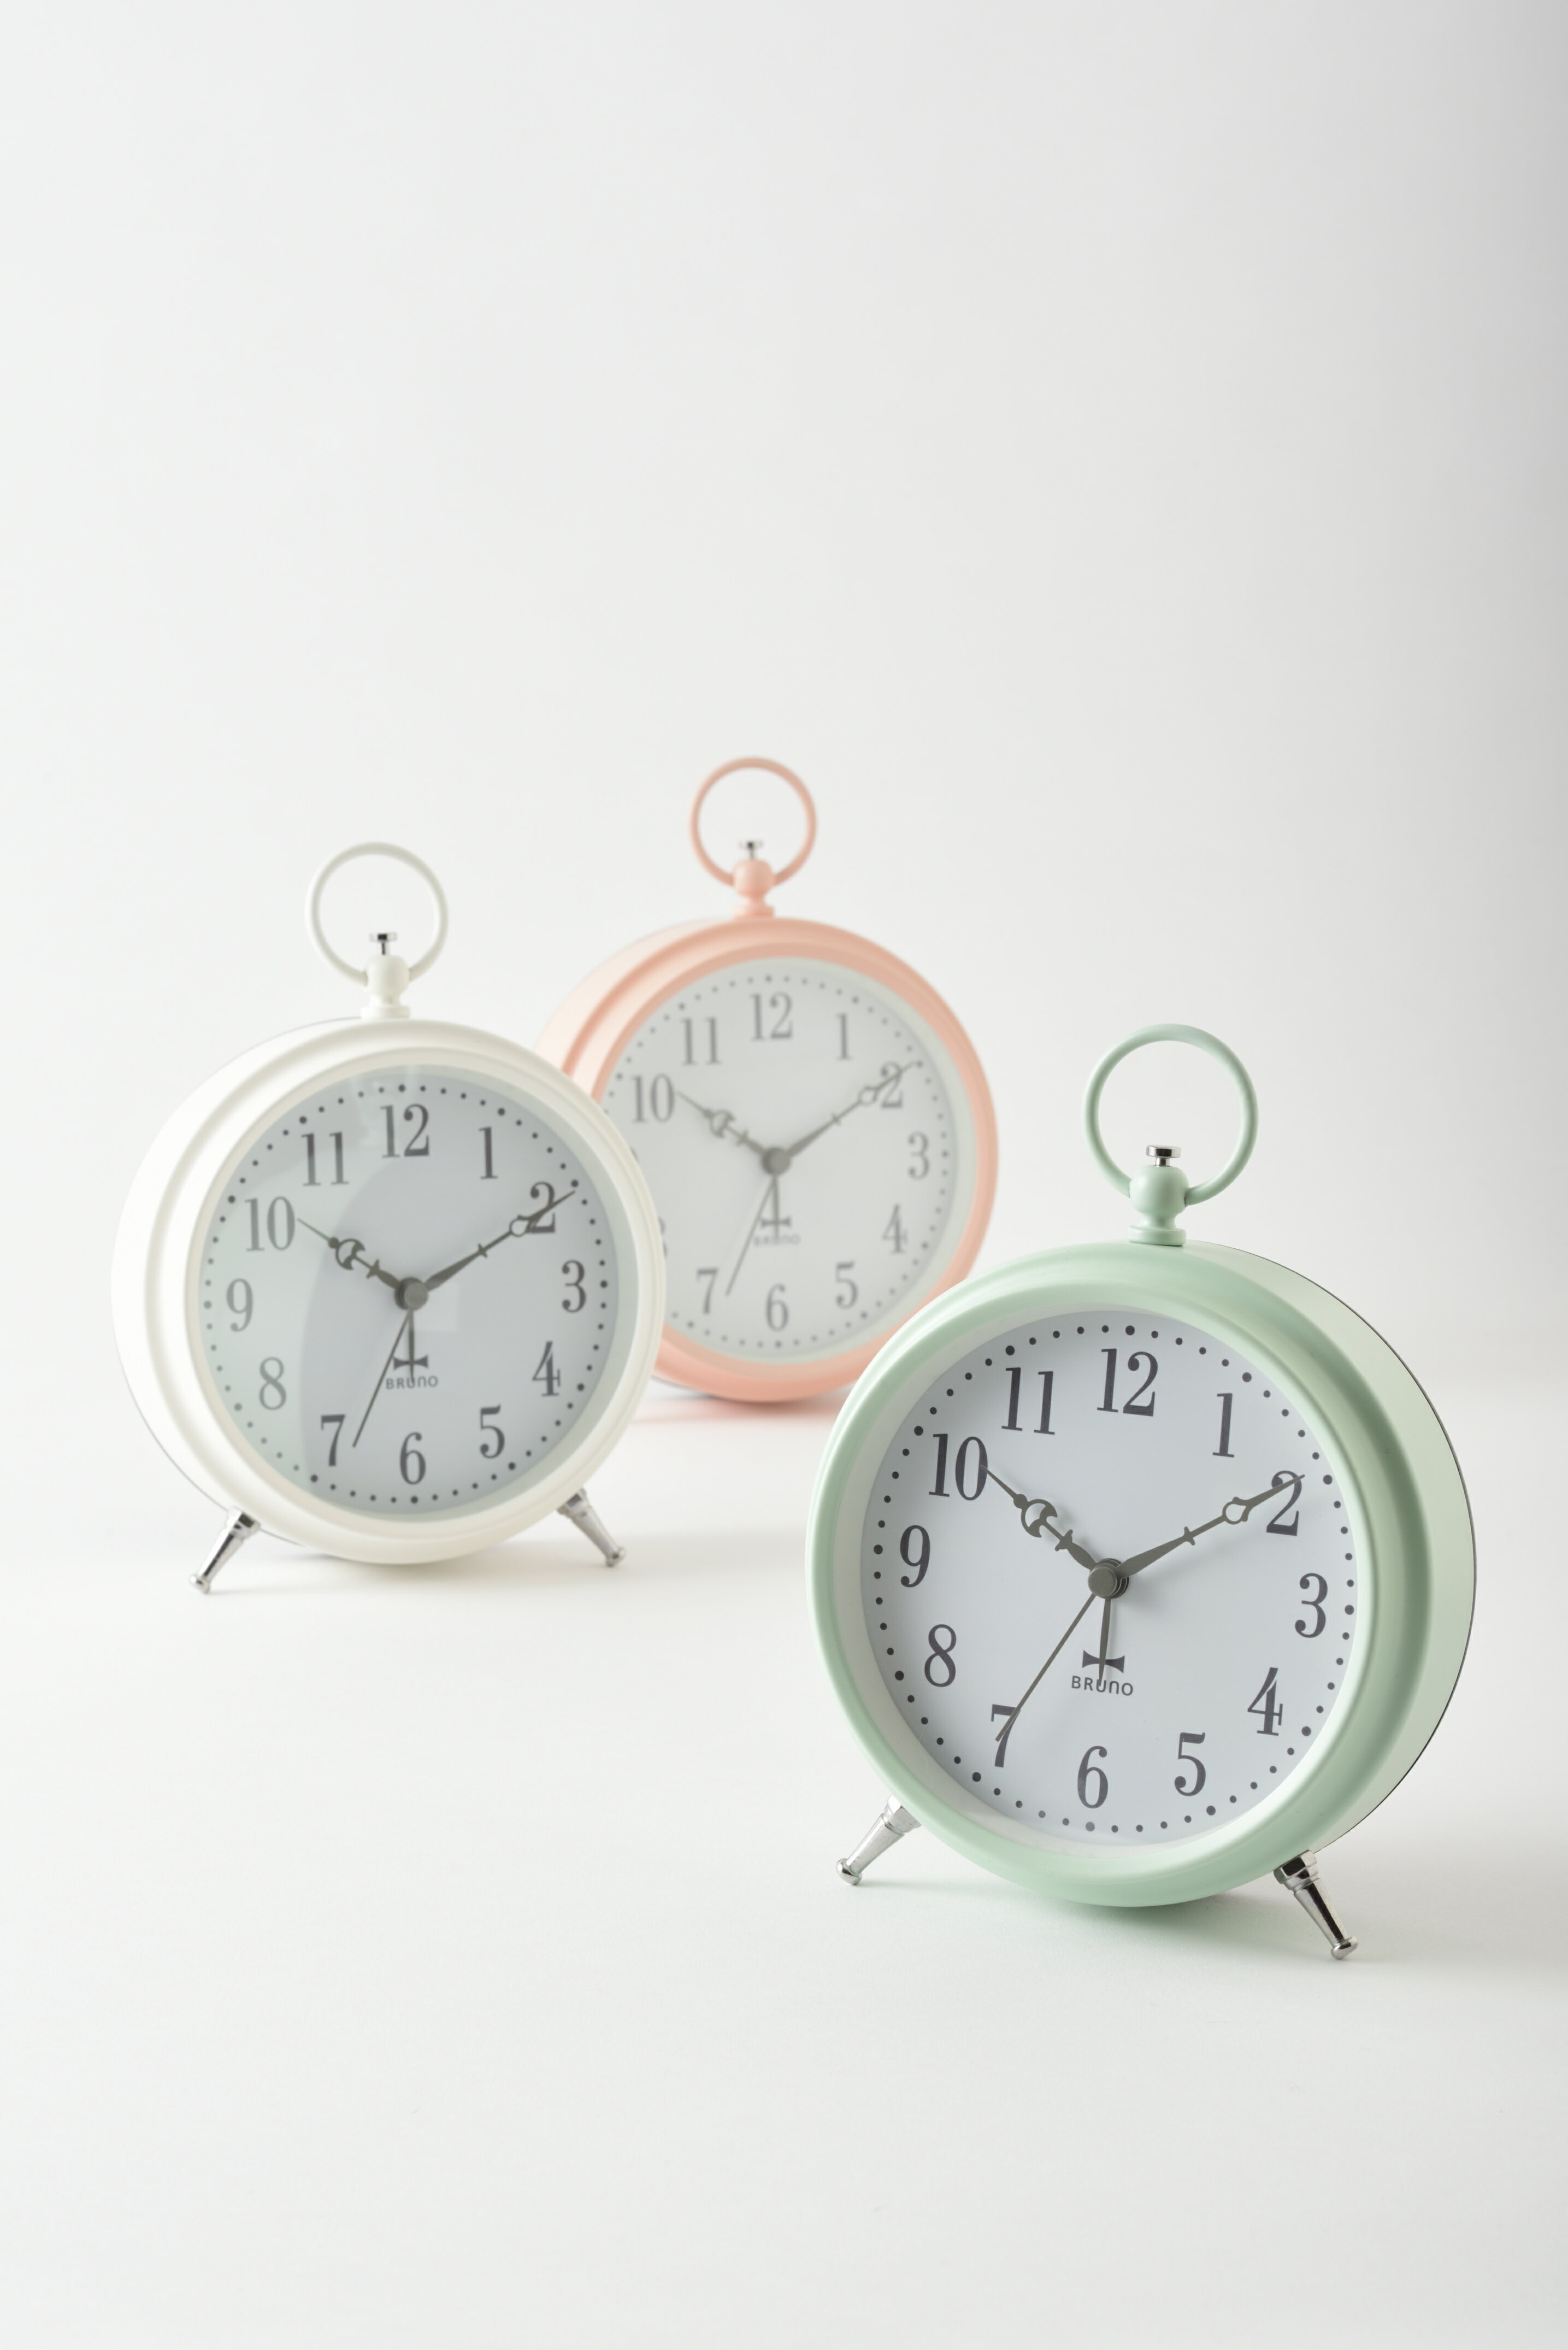 【BRUNO】BCA008 復古懷表式鬧鐘 鬧鐘 時鐘 鐘 復古鬧鐘 懷錶 公司現貨 快速出貨